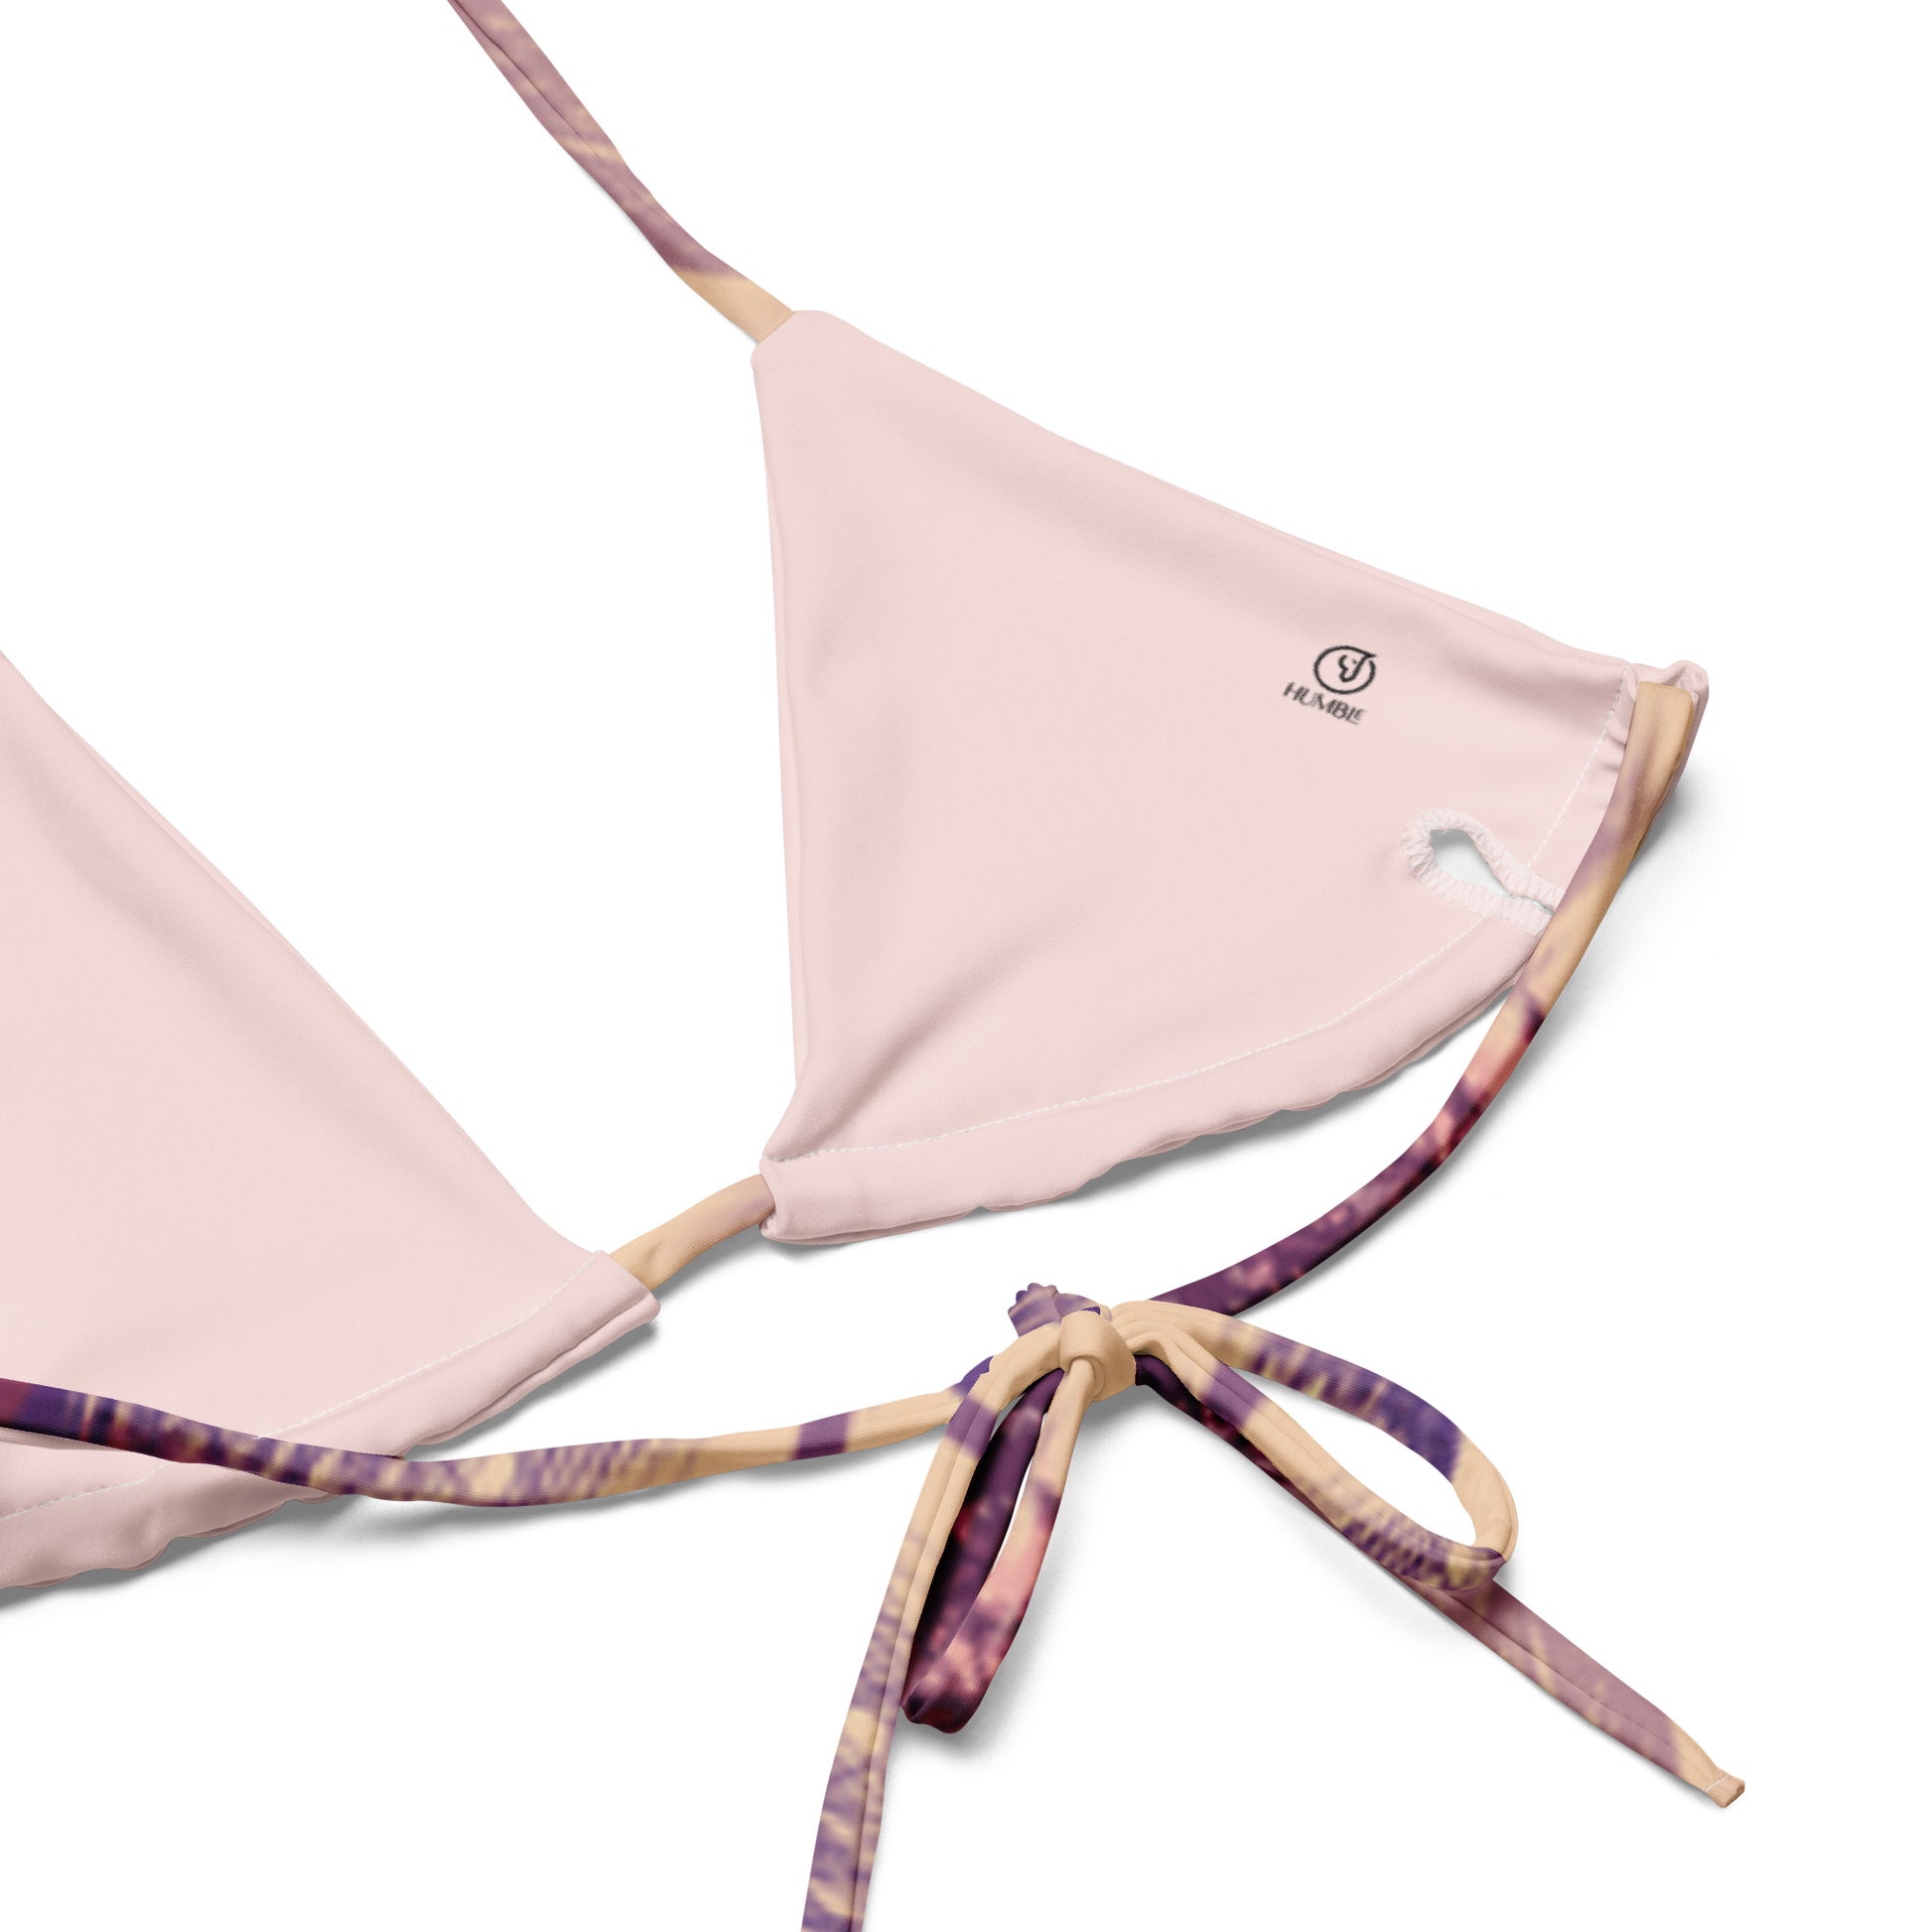 Humble Sportswear, women's mix & match pink tropical all-over print string bikini set